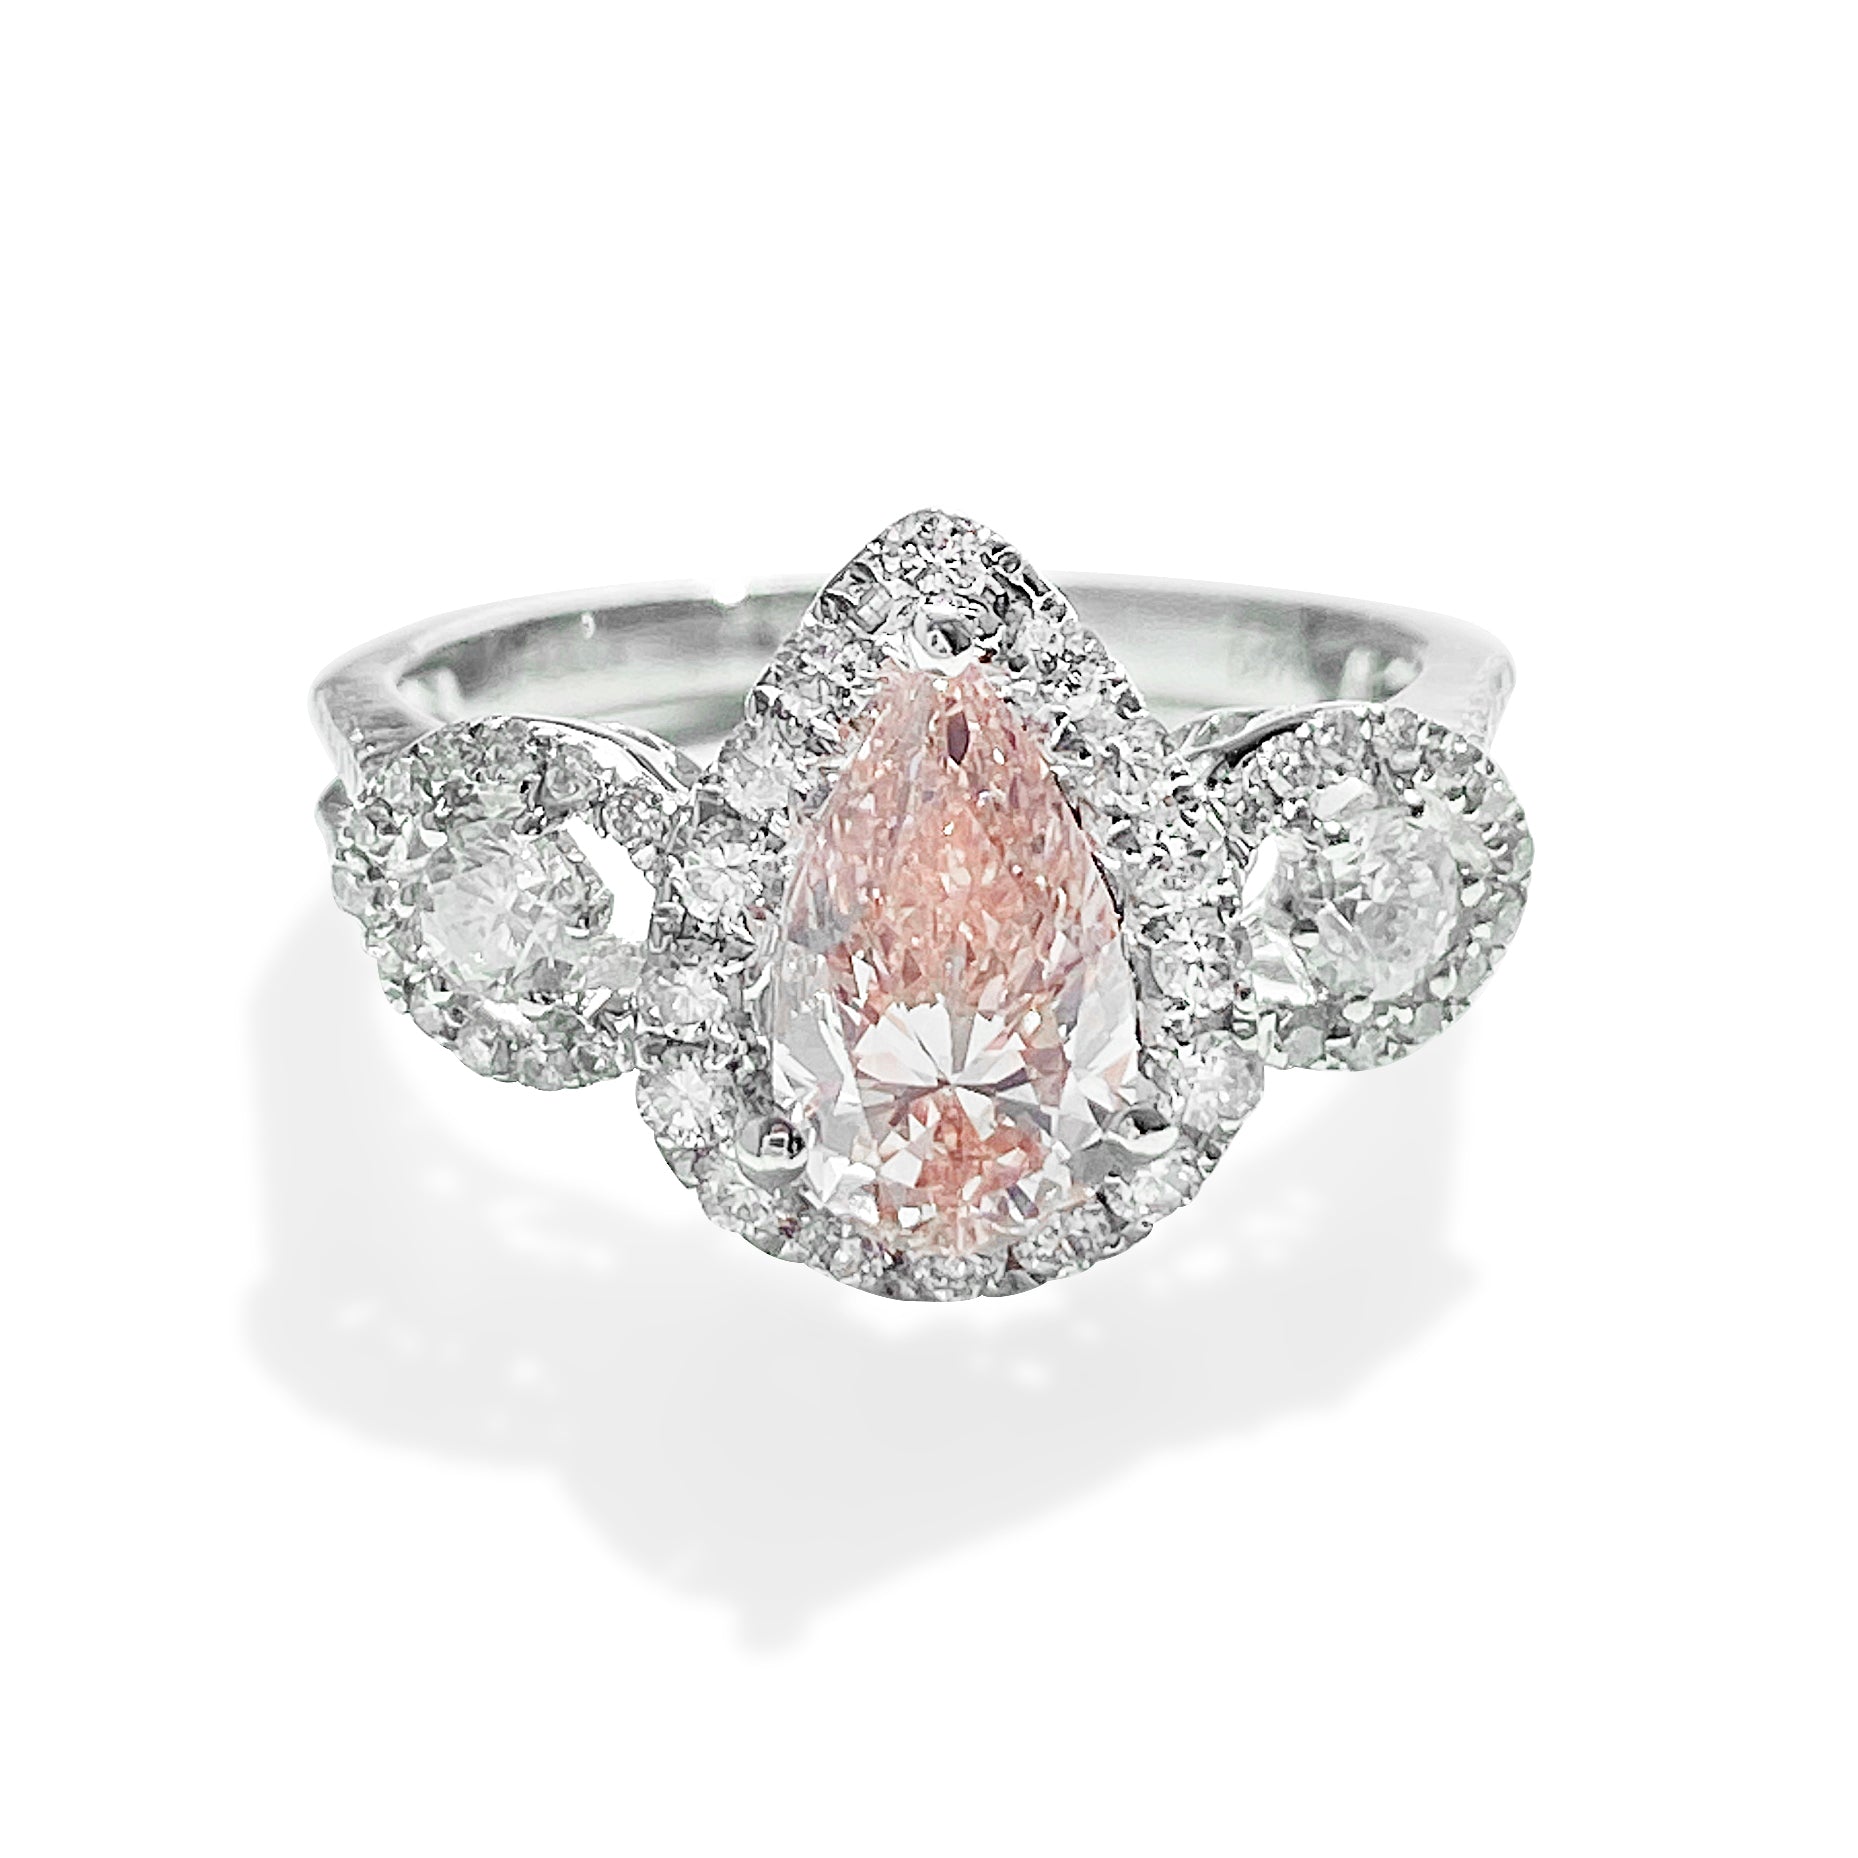 1.01 Carat Fancy Orangy Pink Pear Shaped Diamond Ring